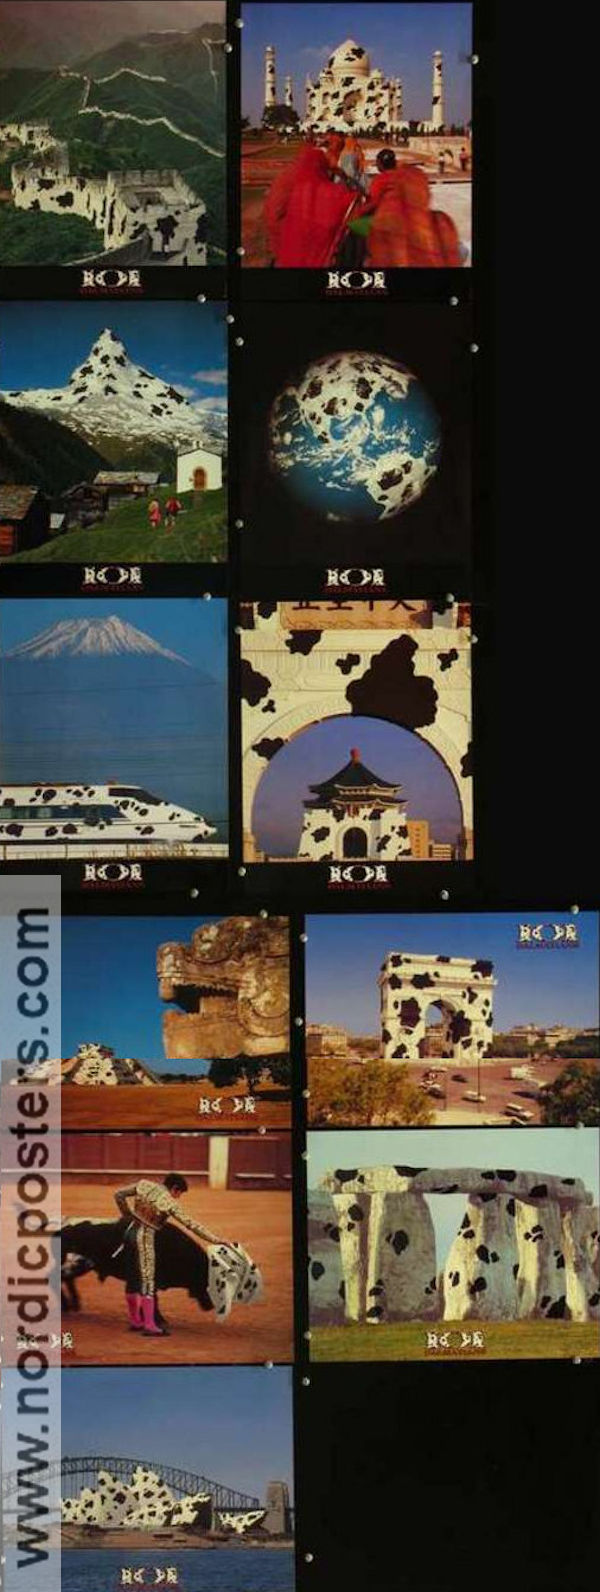 101 Dalmatians 1996 large lobby cards Glenn Close